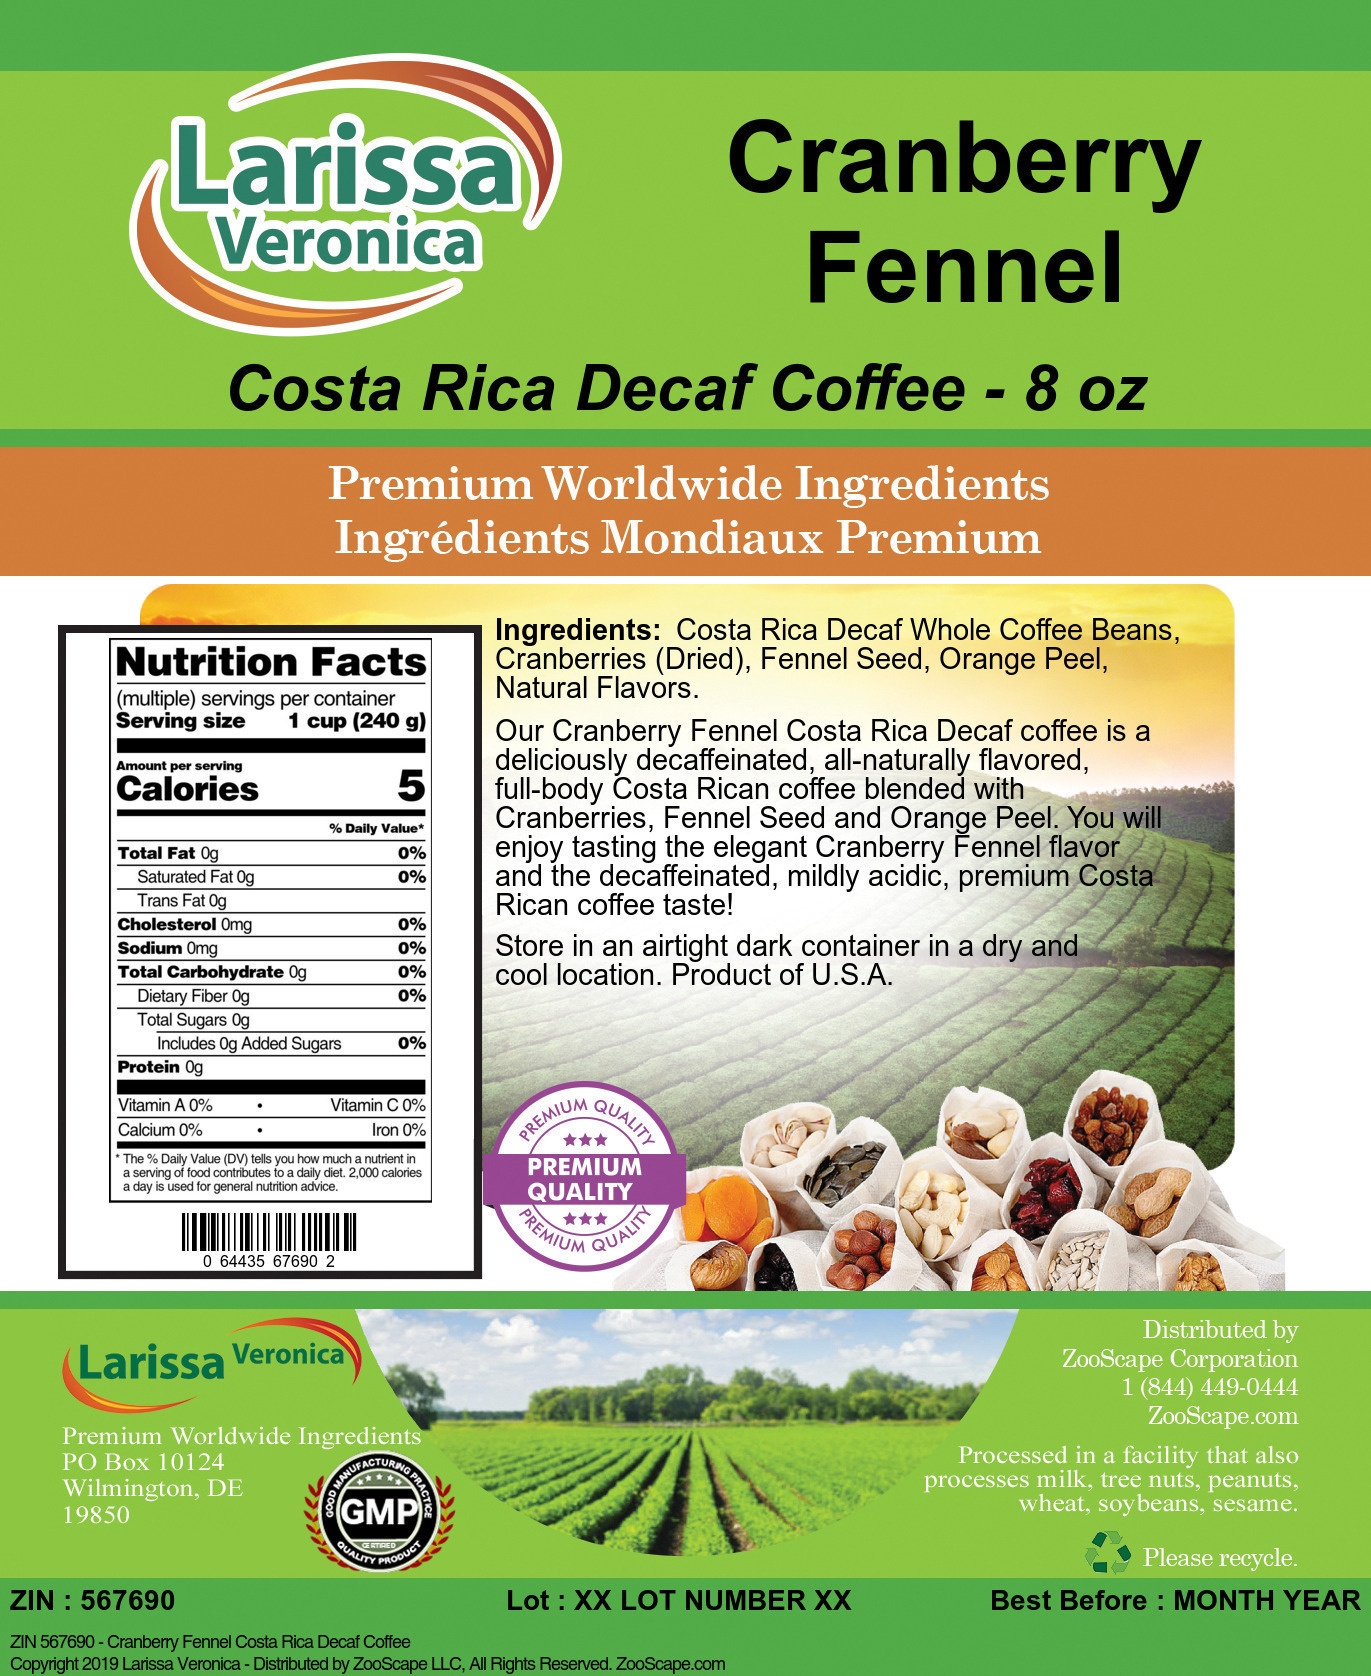 Cranberry Fennel Costa Rica Decaf Coffee - Label